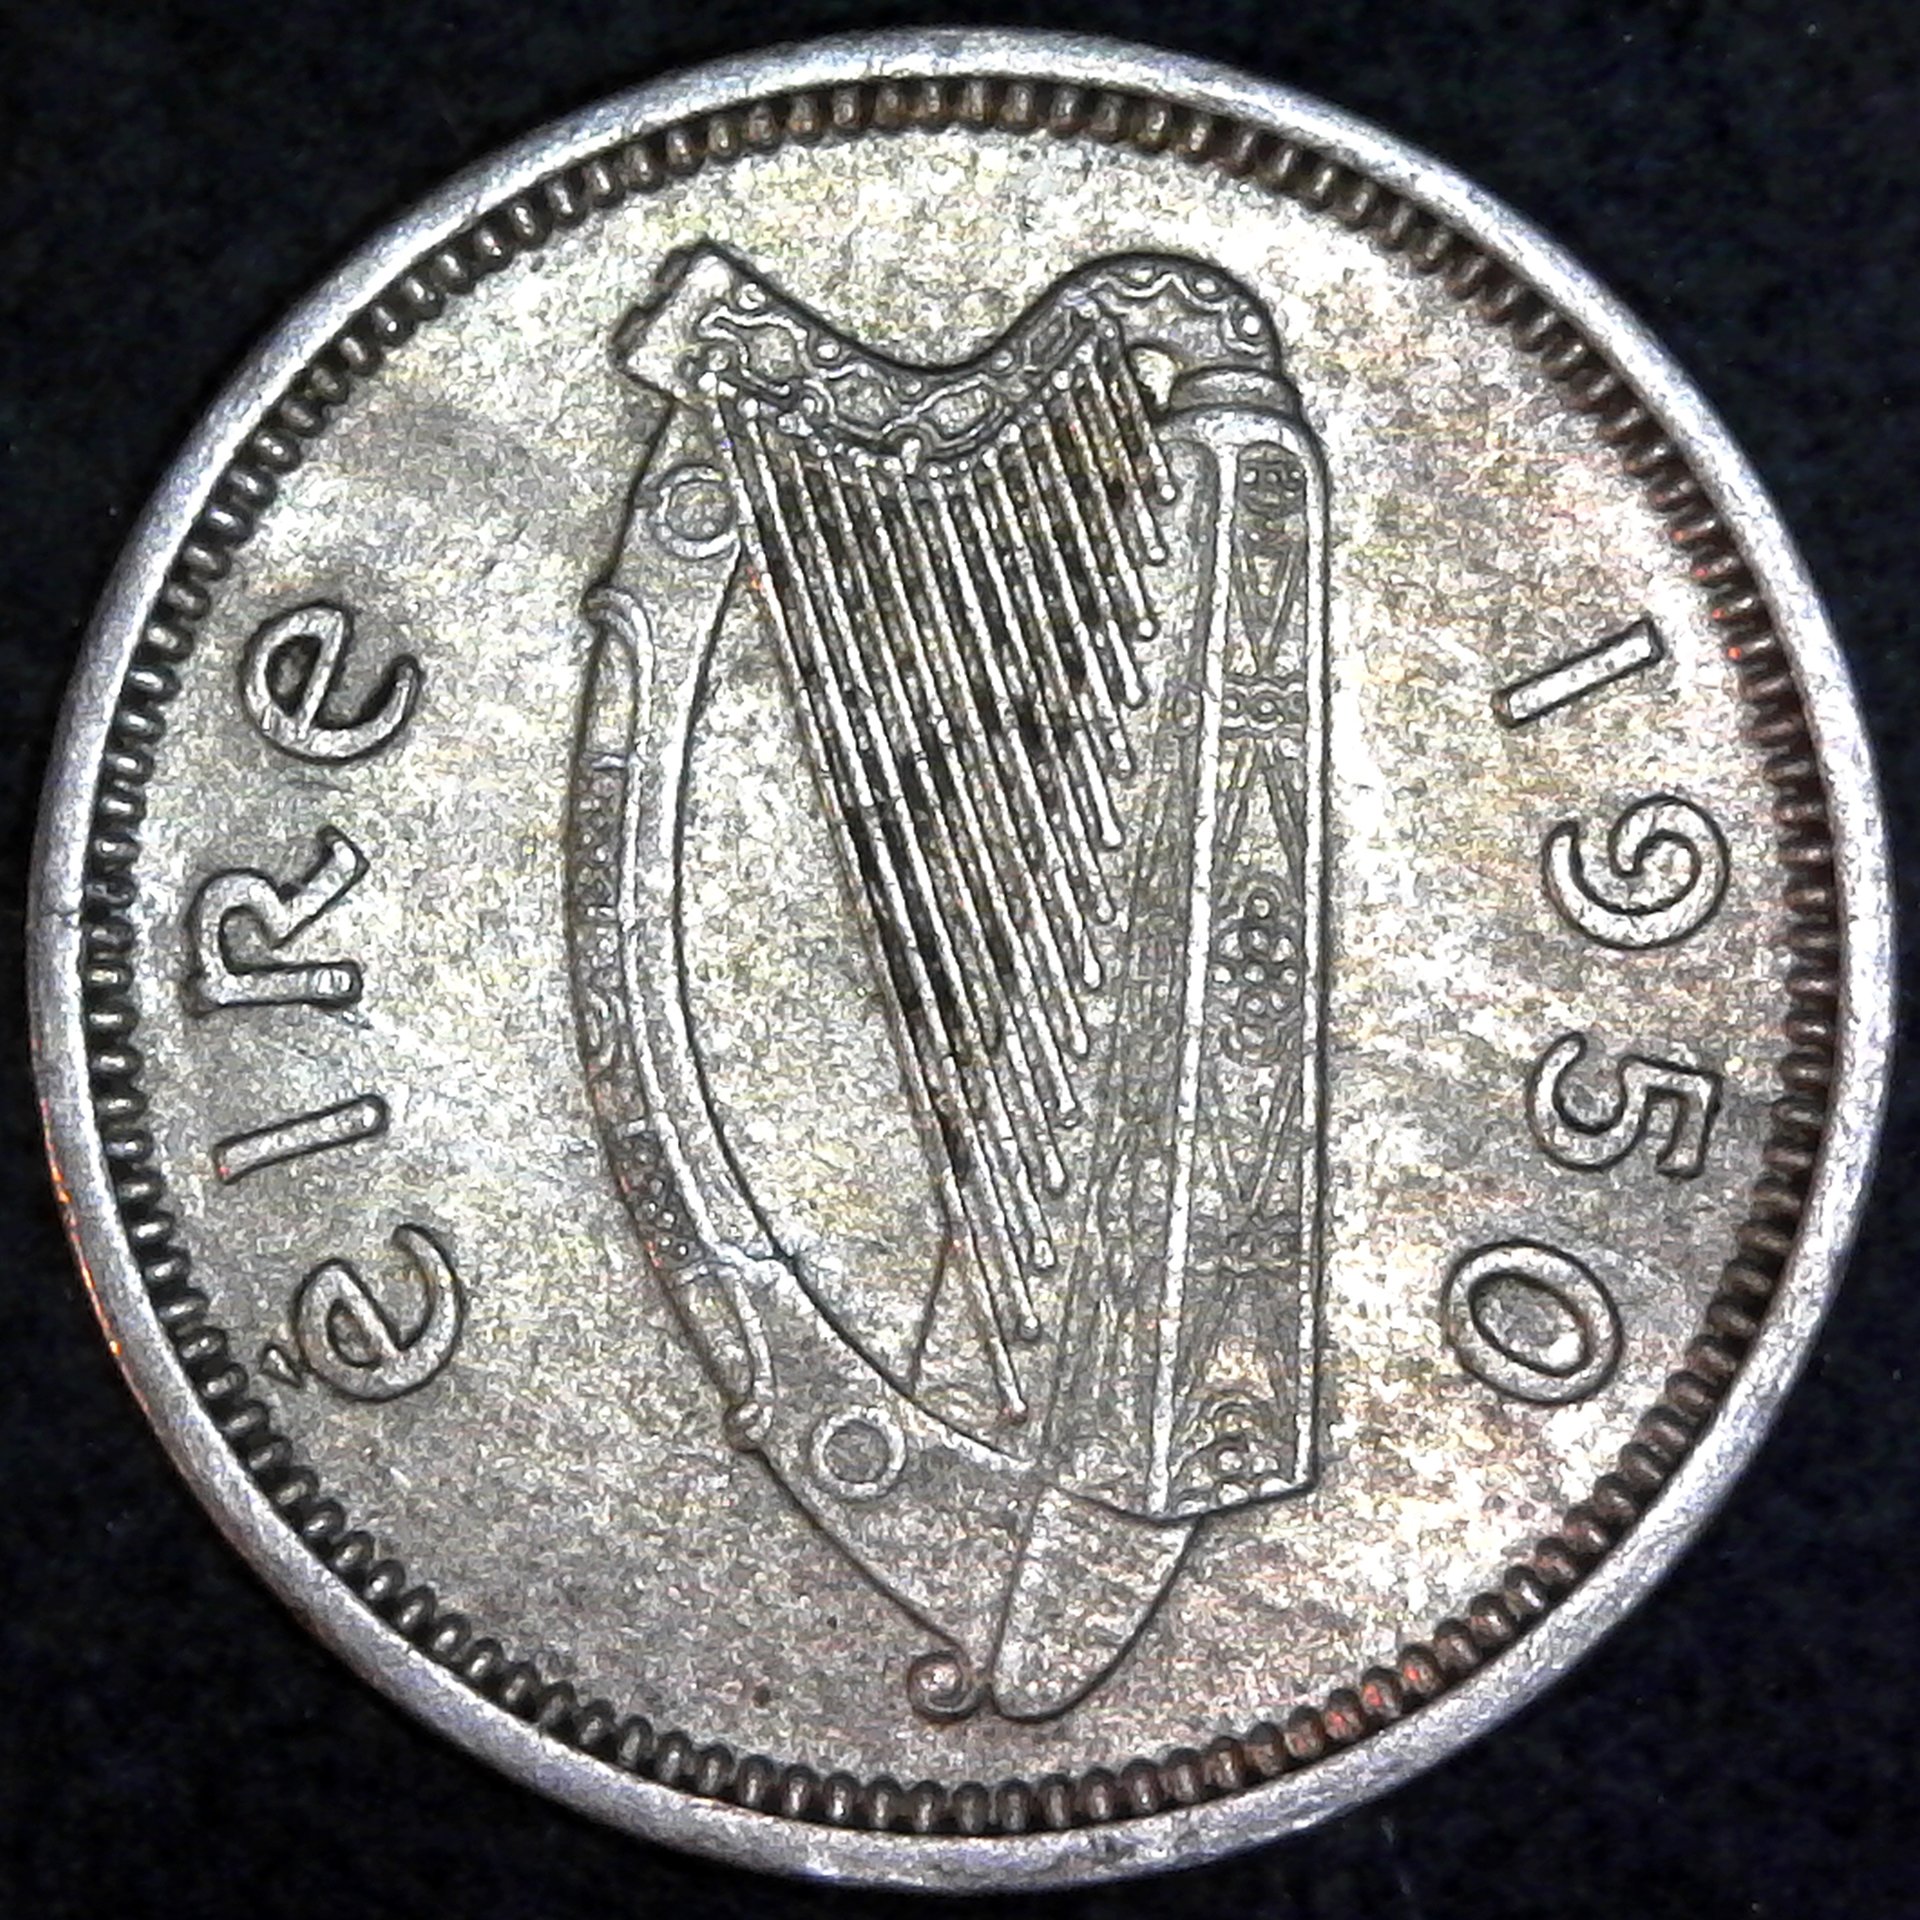 Ireland 3 Pence 1950 rev.jpg